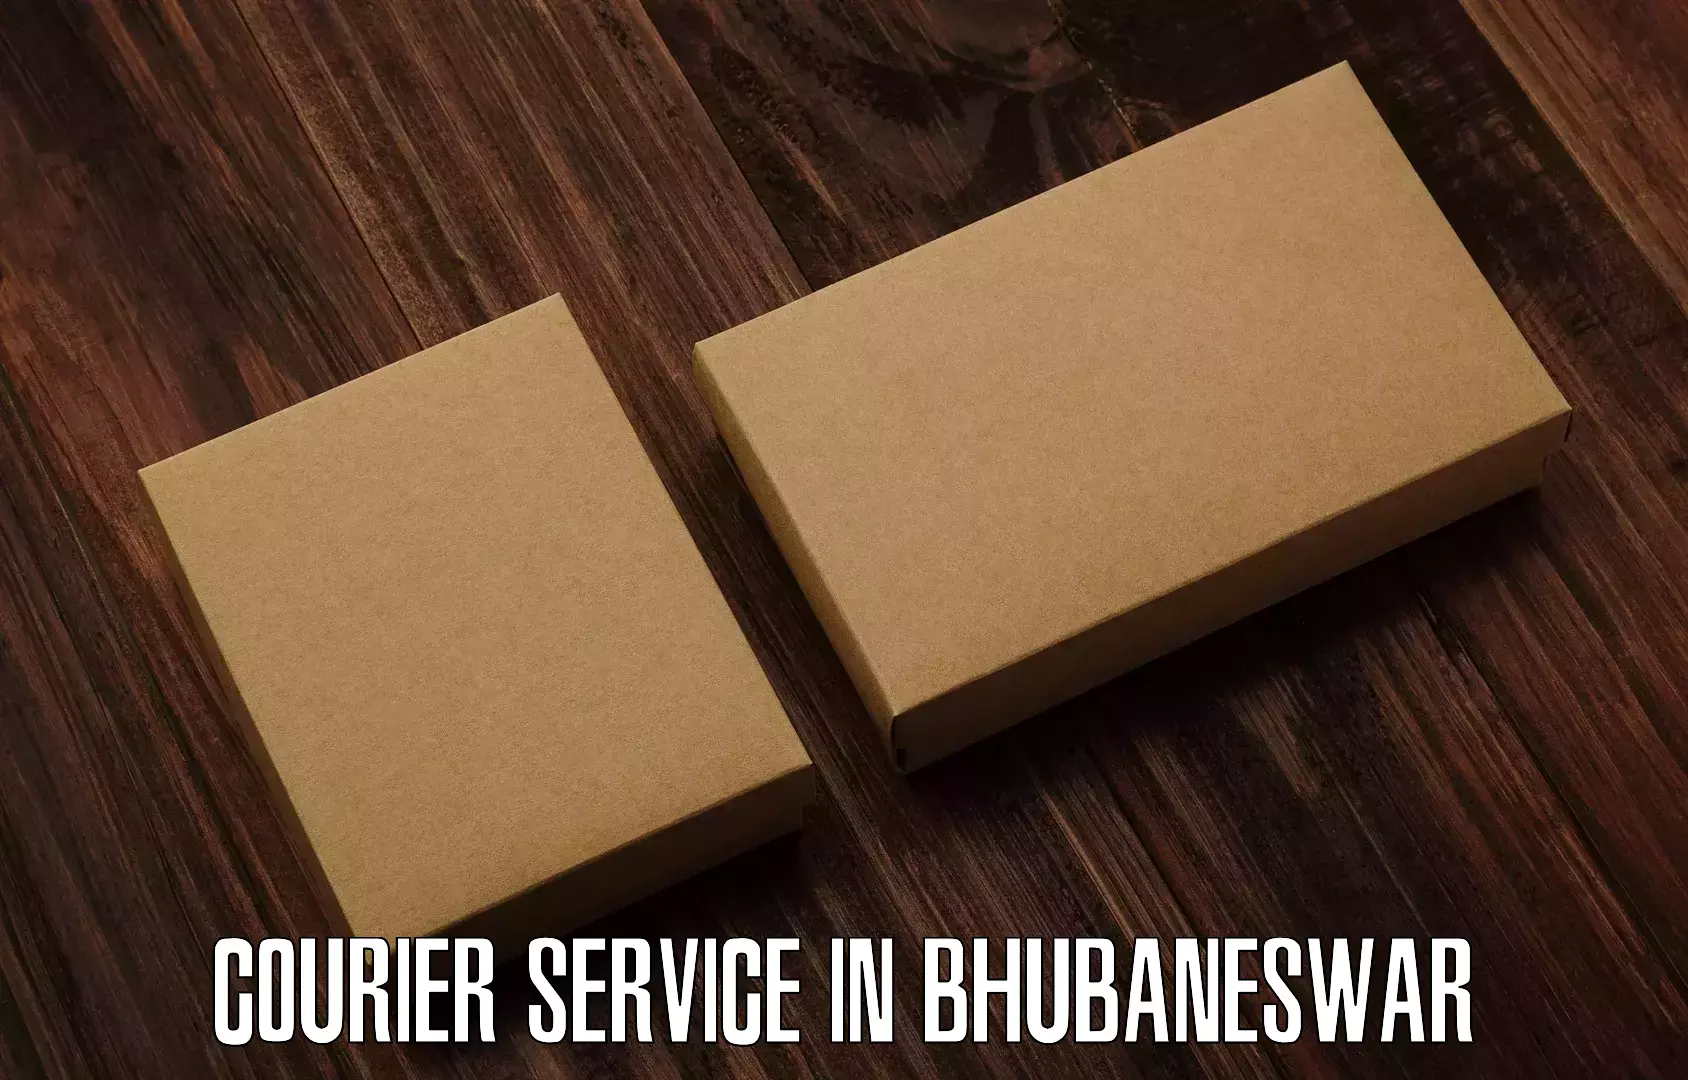 Courier service comparison in Bhubaneswar